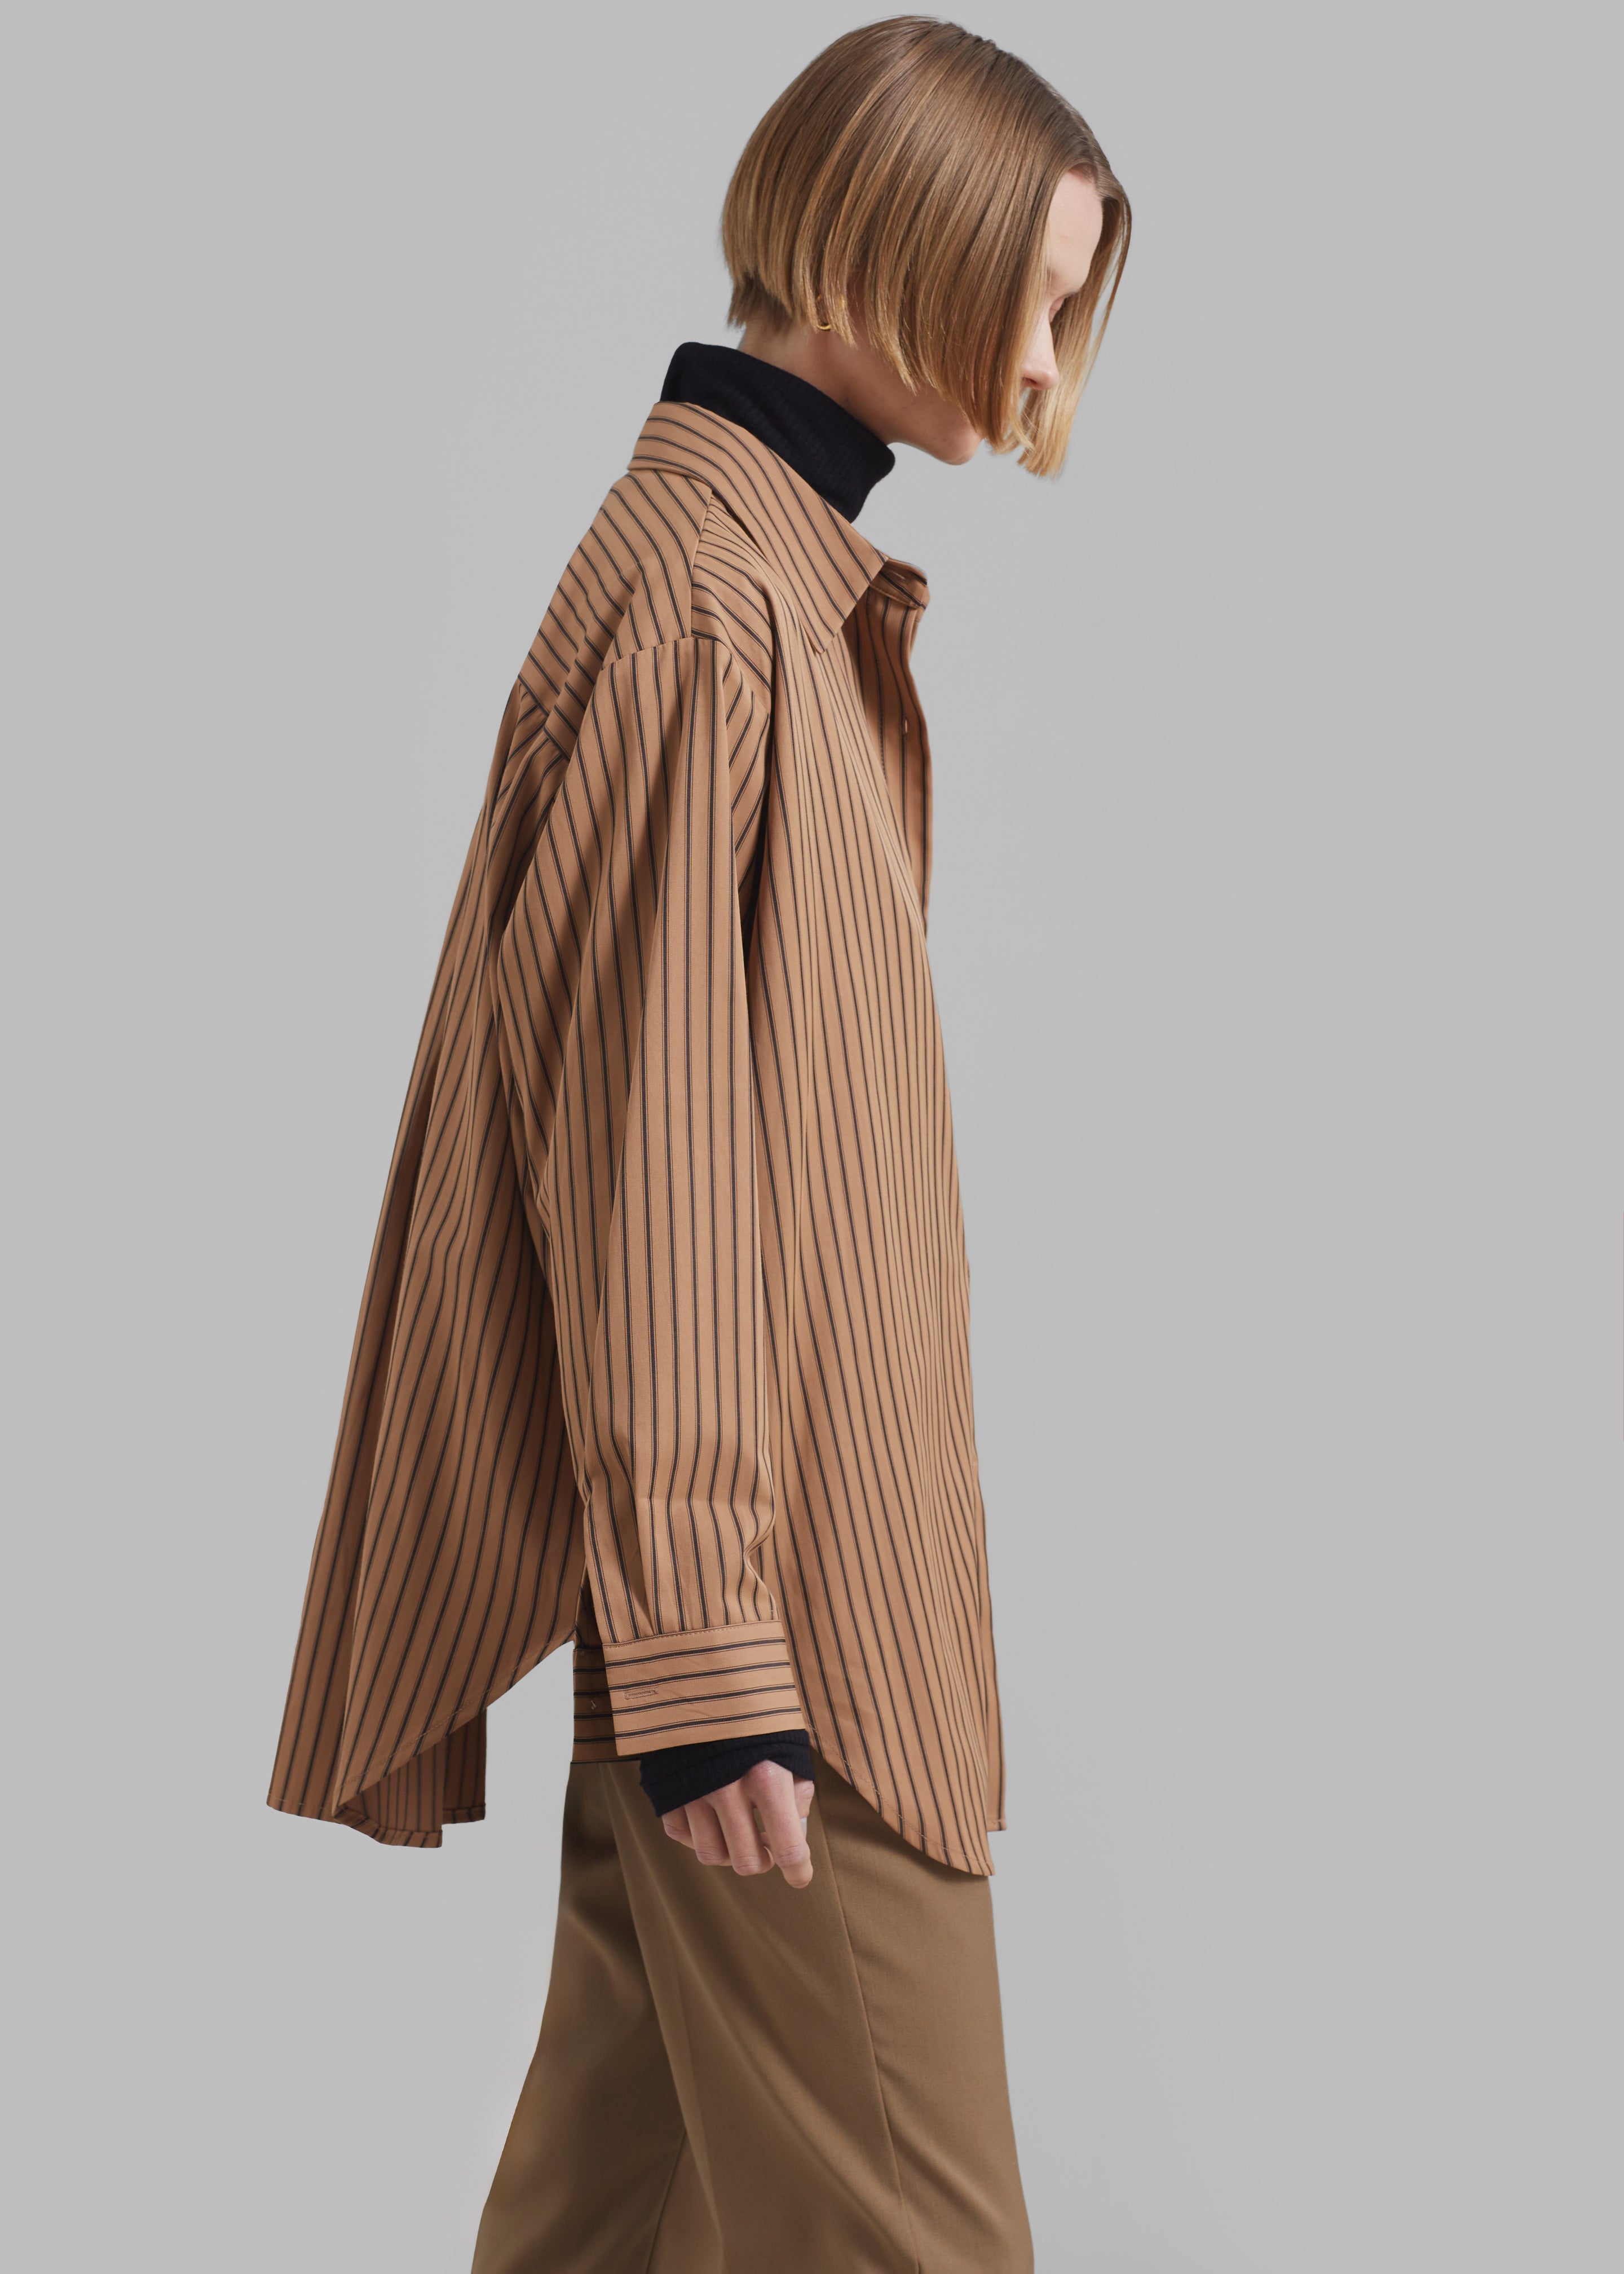 Rine Pocket Shirt - Camel/Black Stripe - 7